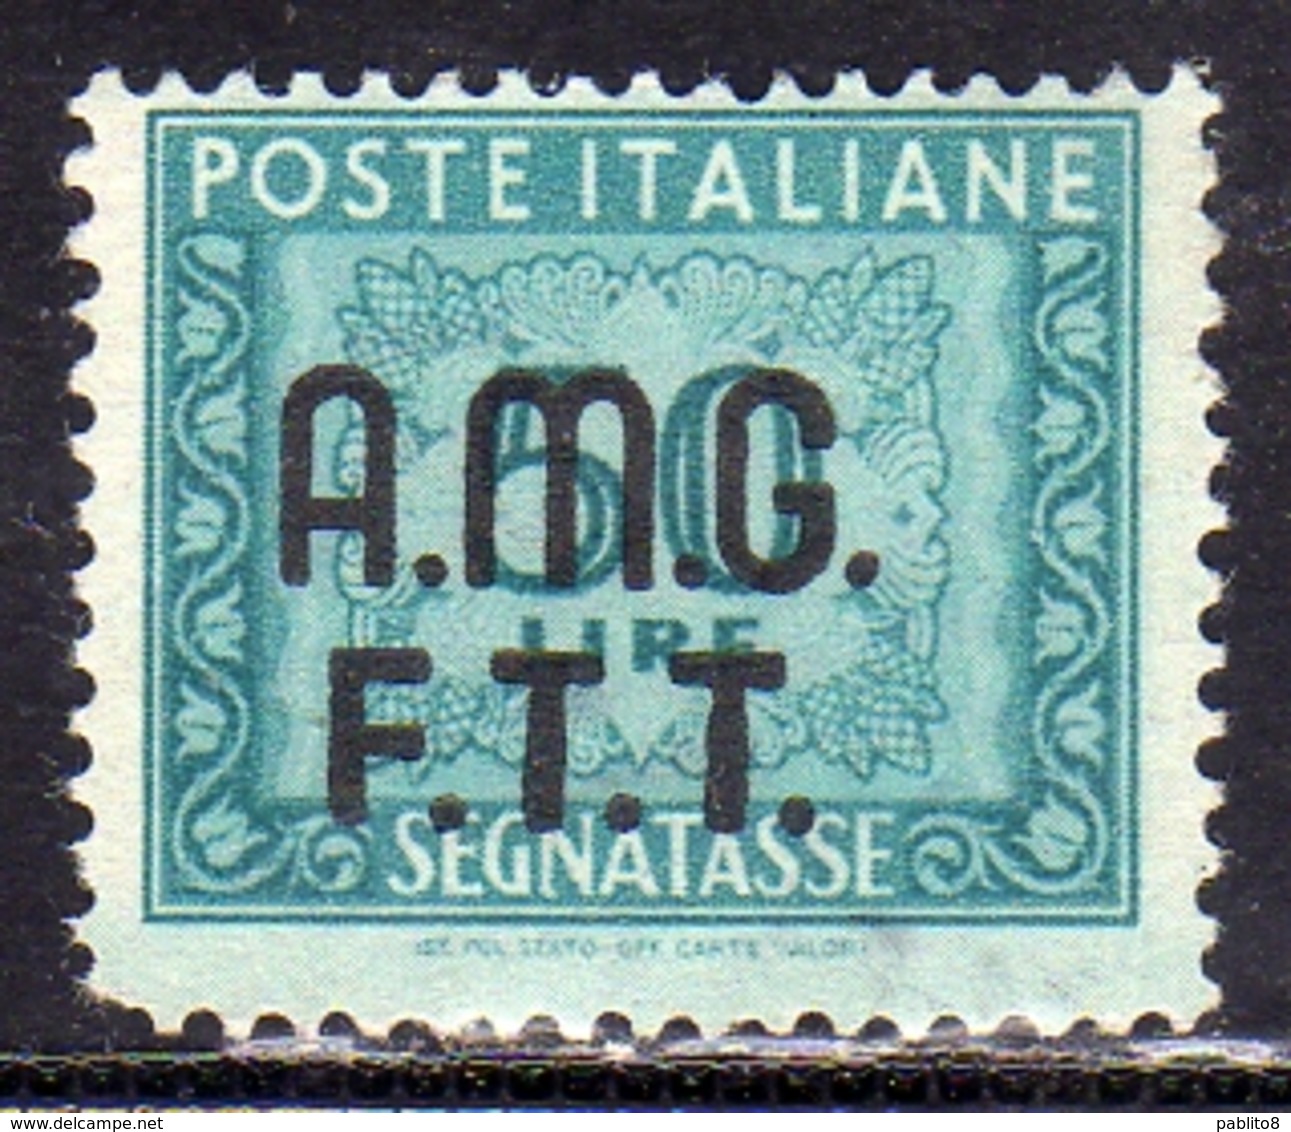 TRIESTE A 1947 1949 AMG-FTT SOPRASTAMPATO D'ITALIA ITALY OVERPRINTED SEGNATASSE POSTAGE DUE TAXES TASSE LIRE 50 MNH - Postage Due